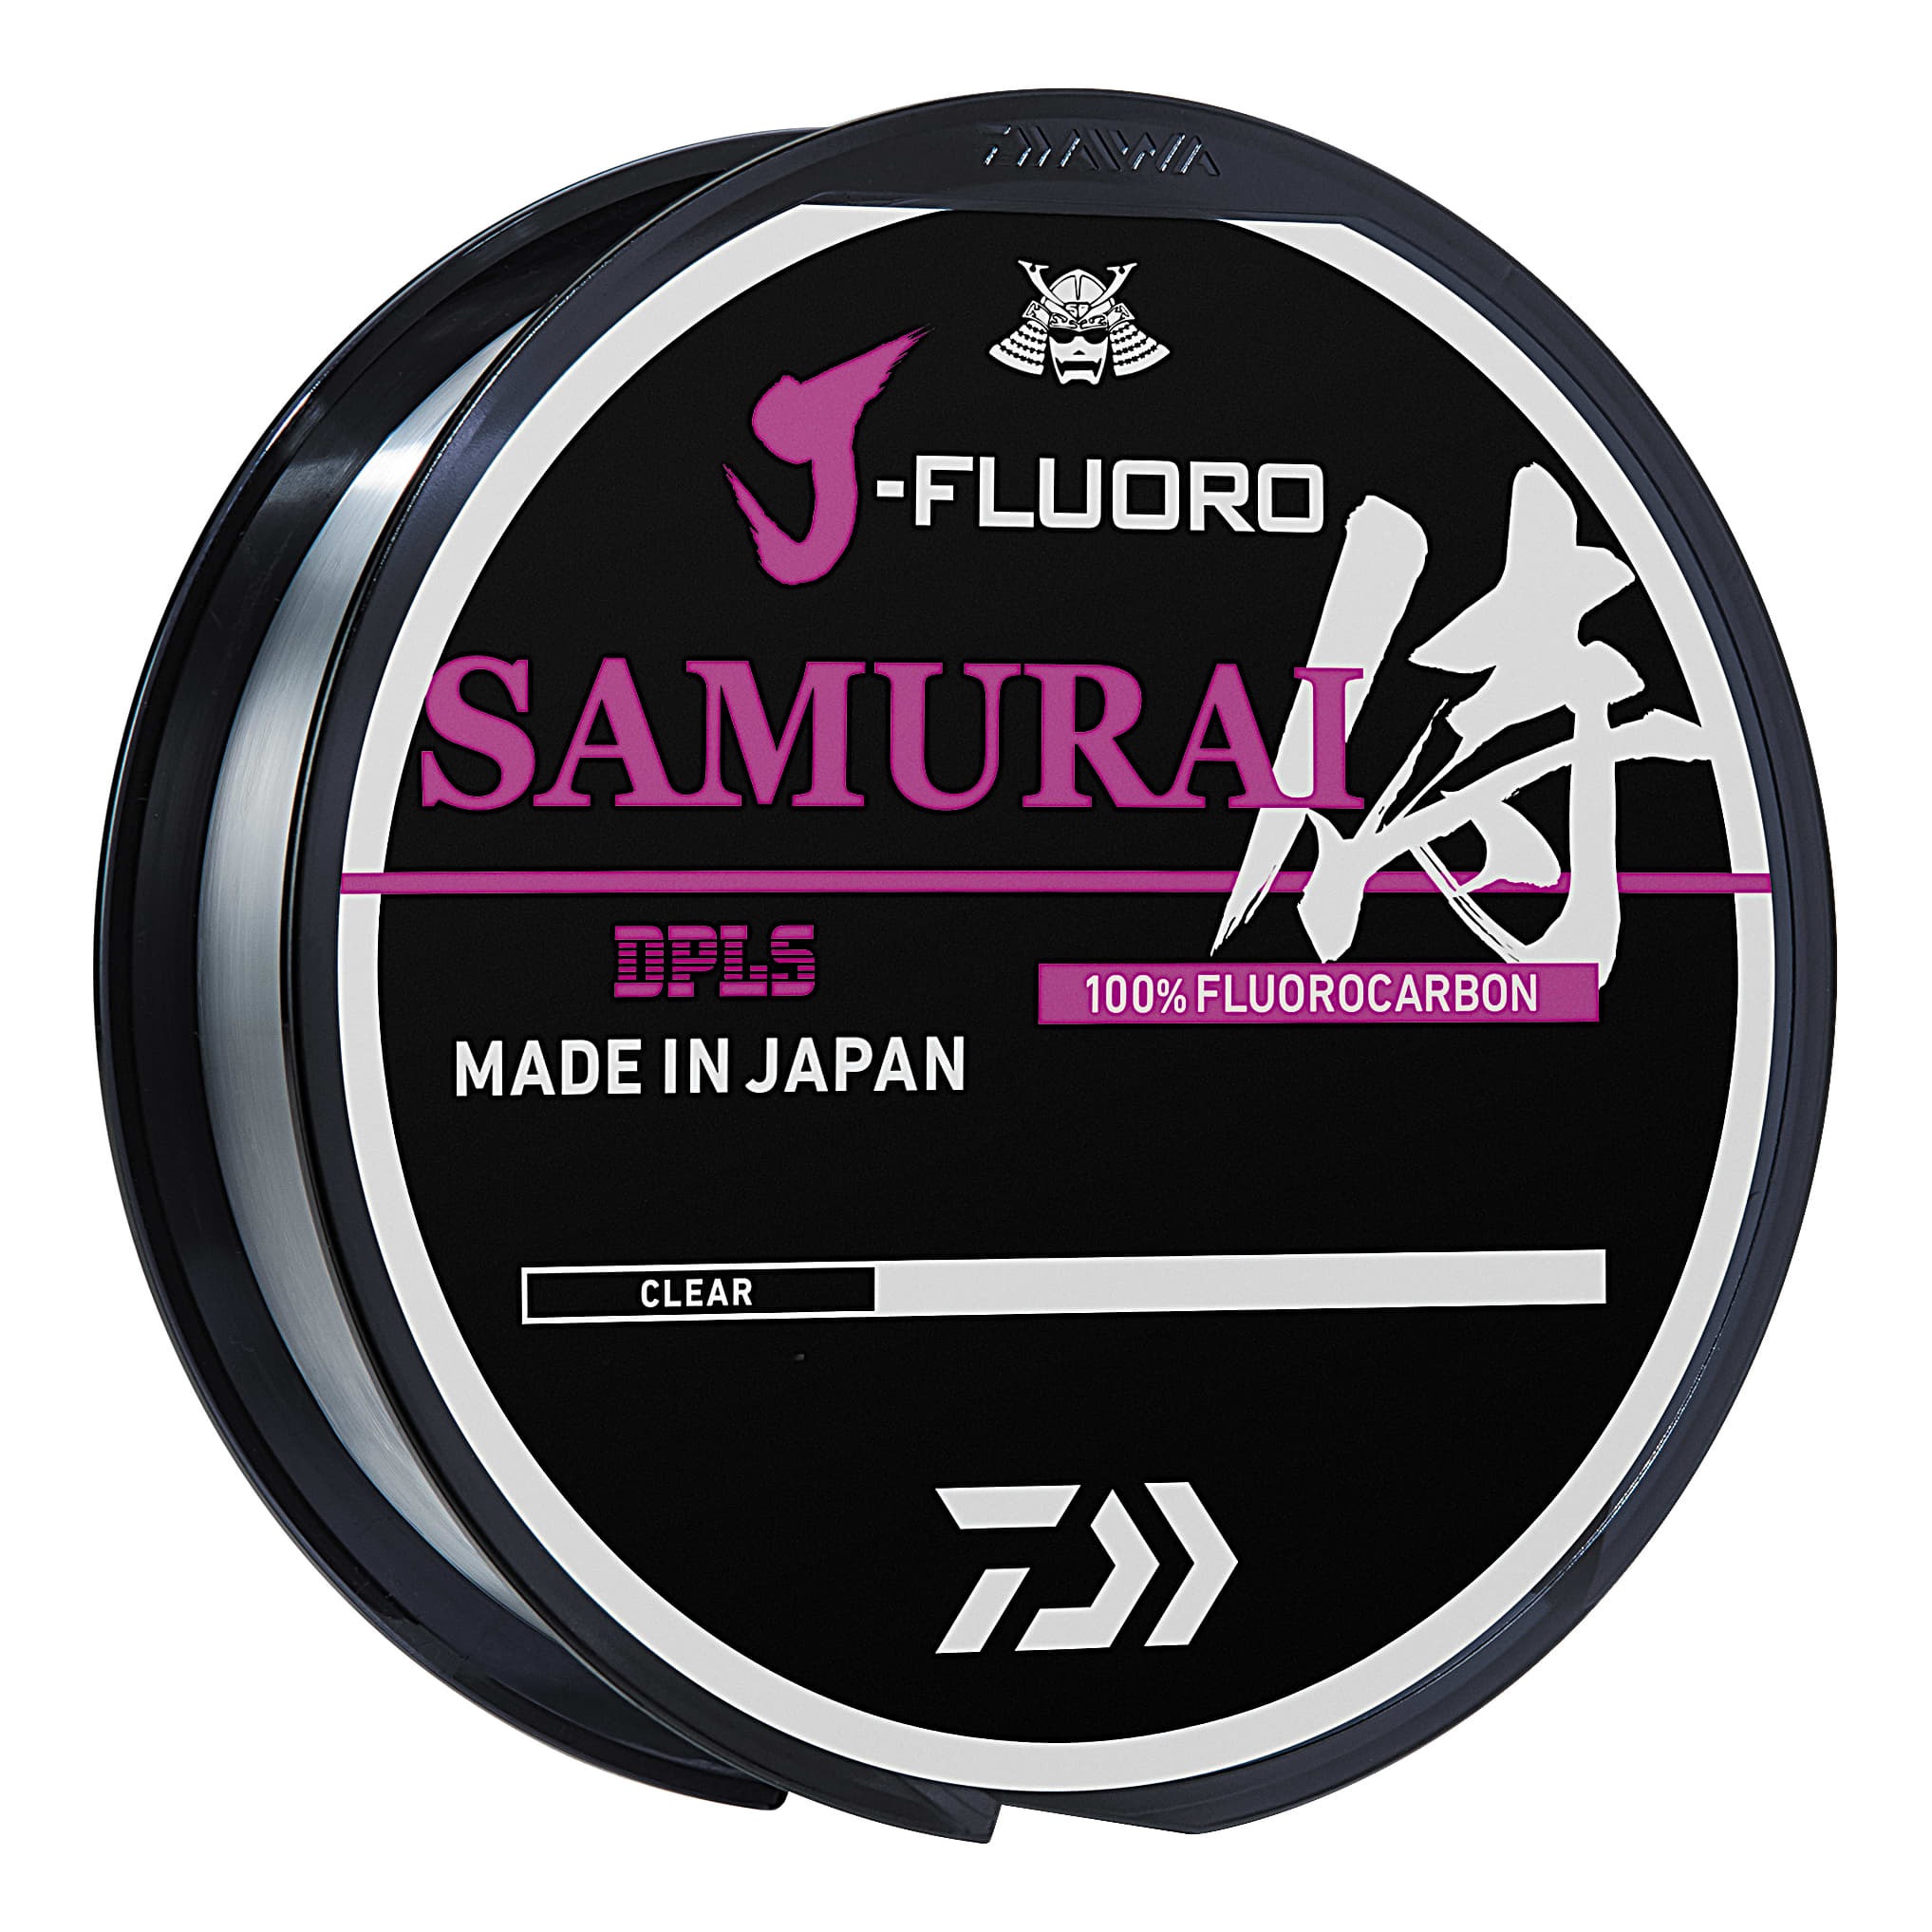 Daiwa® J-Fluoro Samurai Fluoro Line